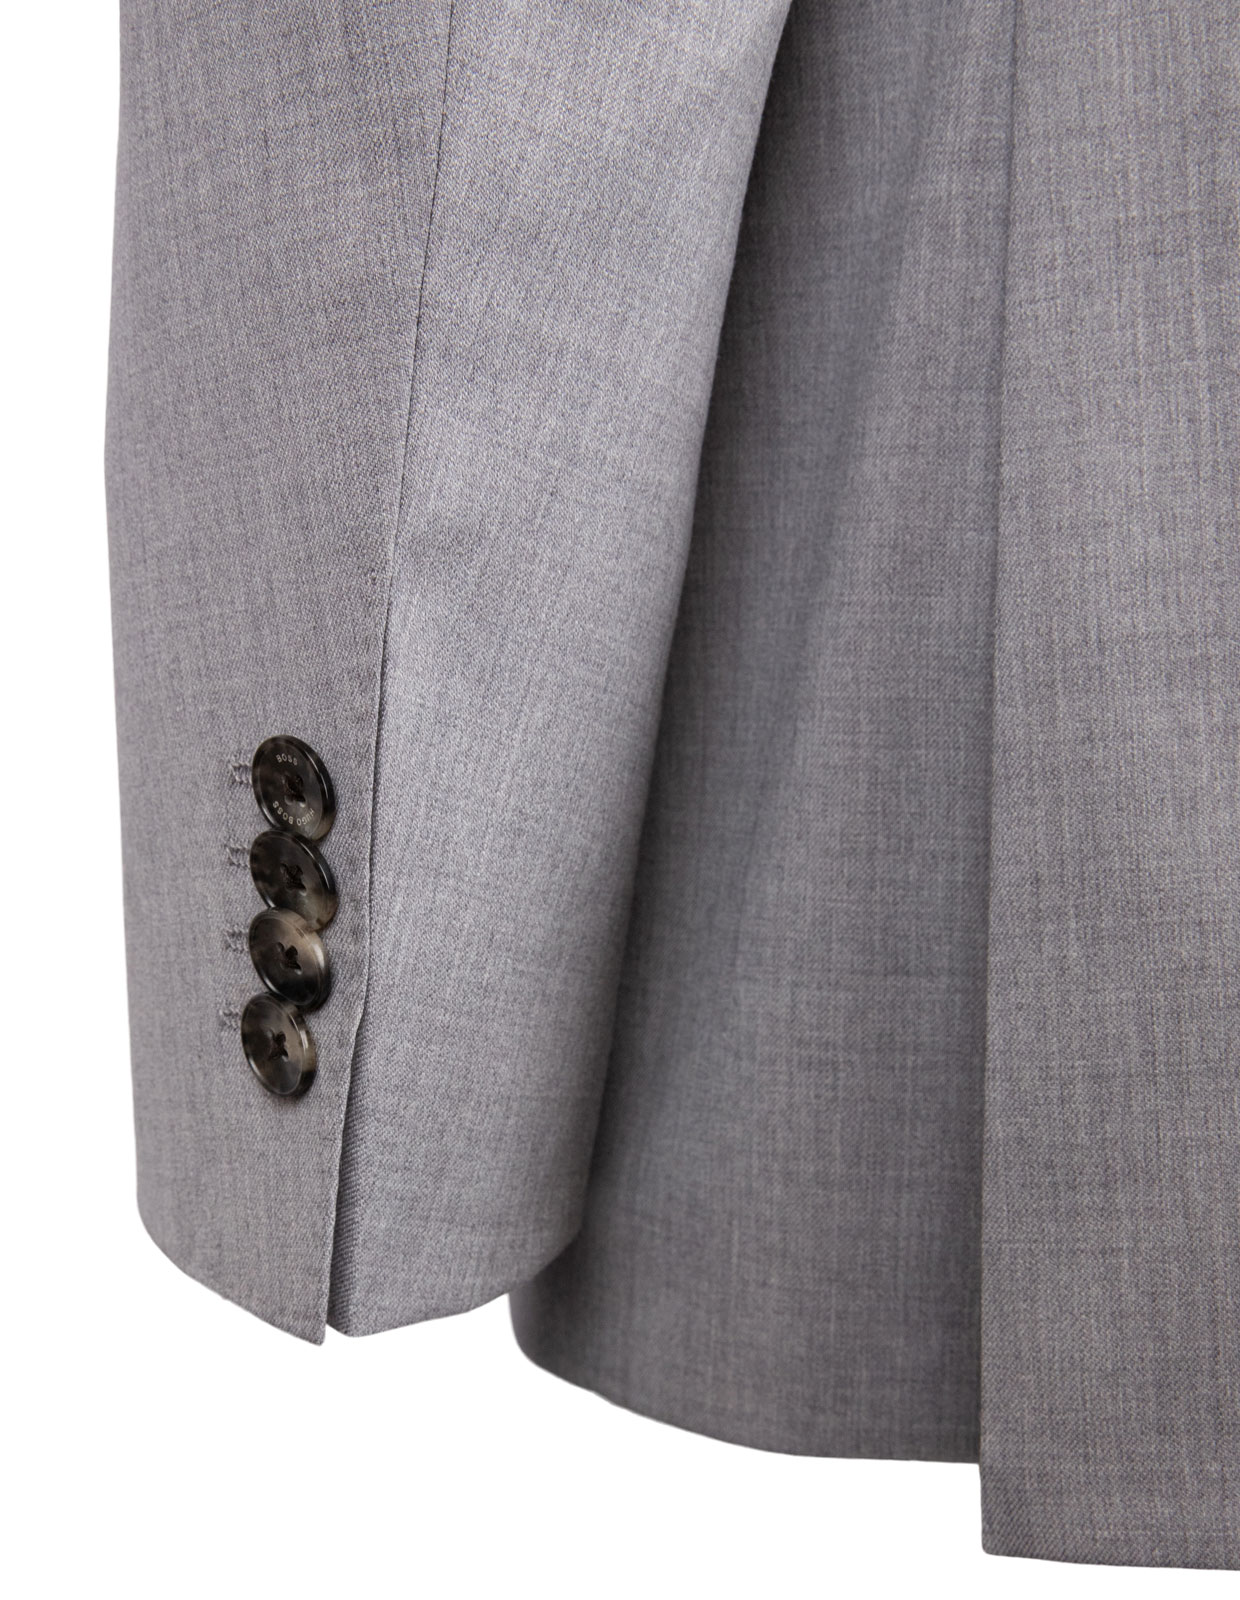 Jeckson Lenon Wool Suit Solid Medium Grey Stl 112